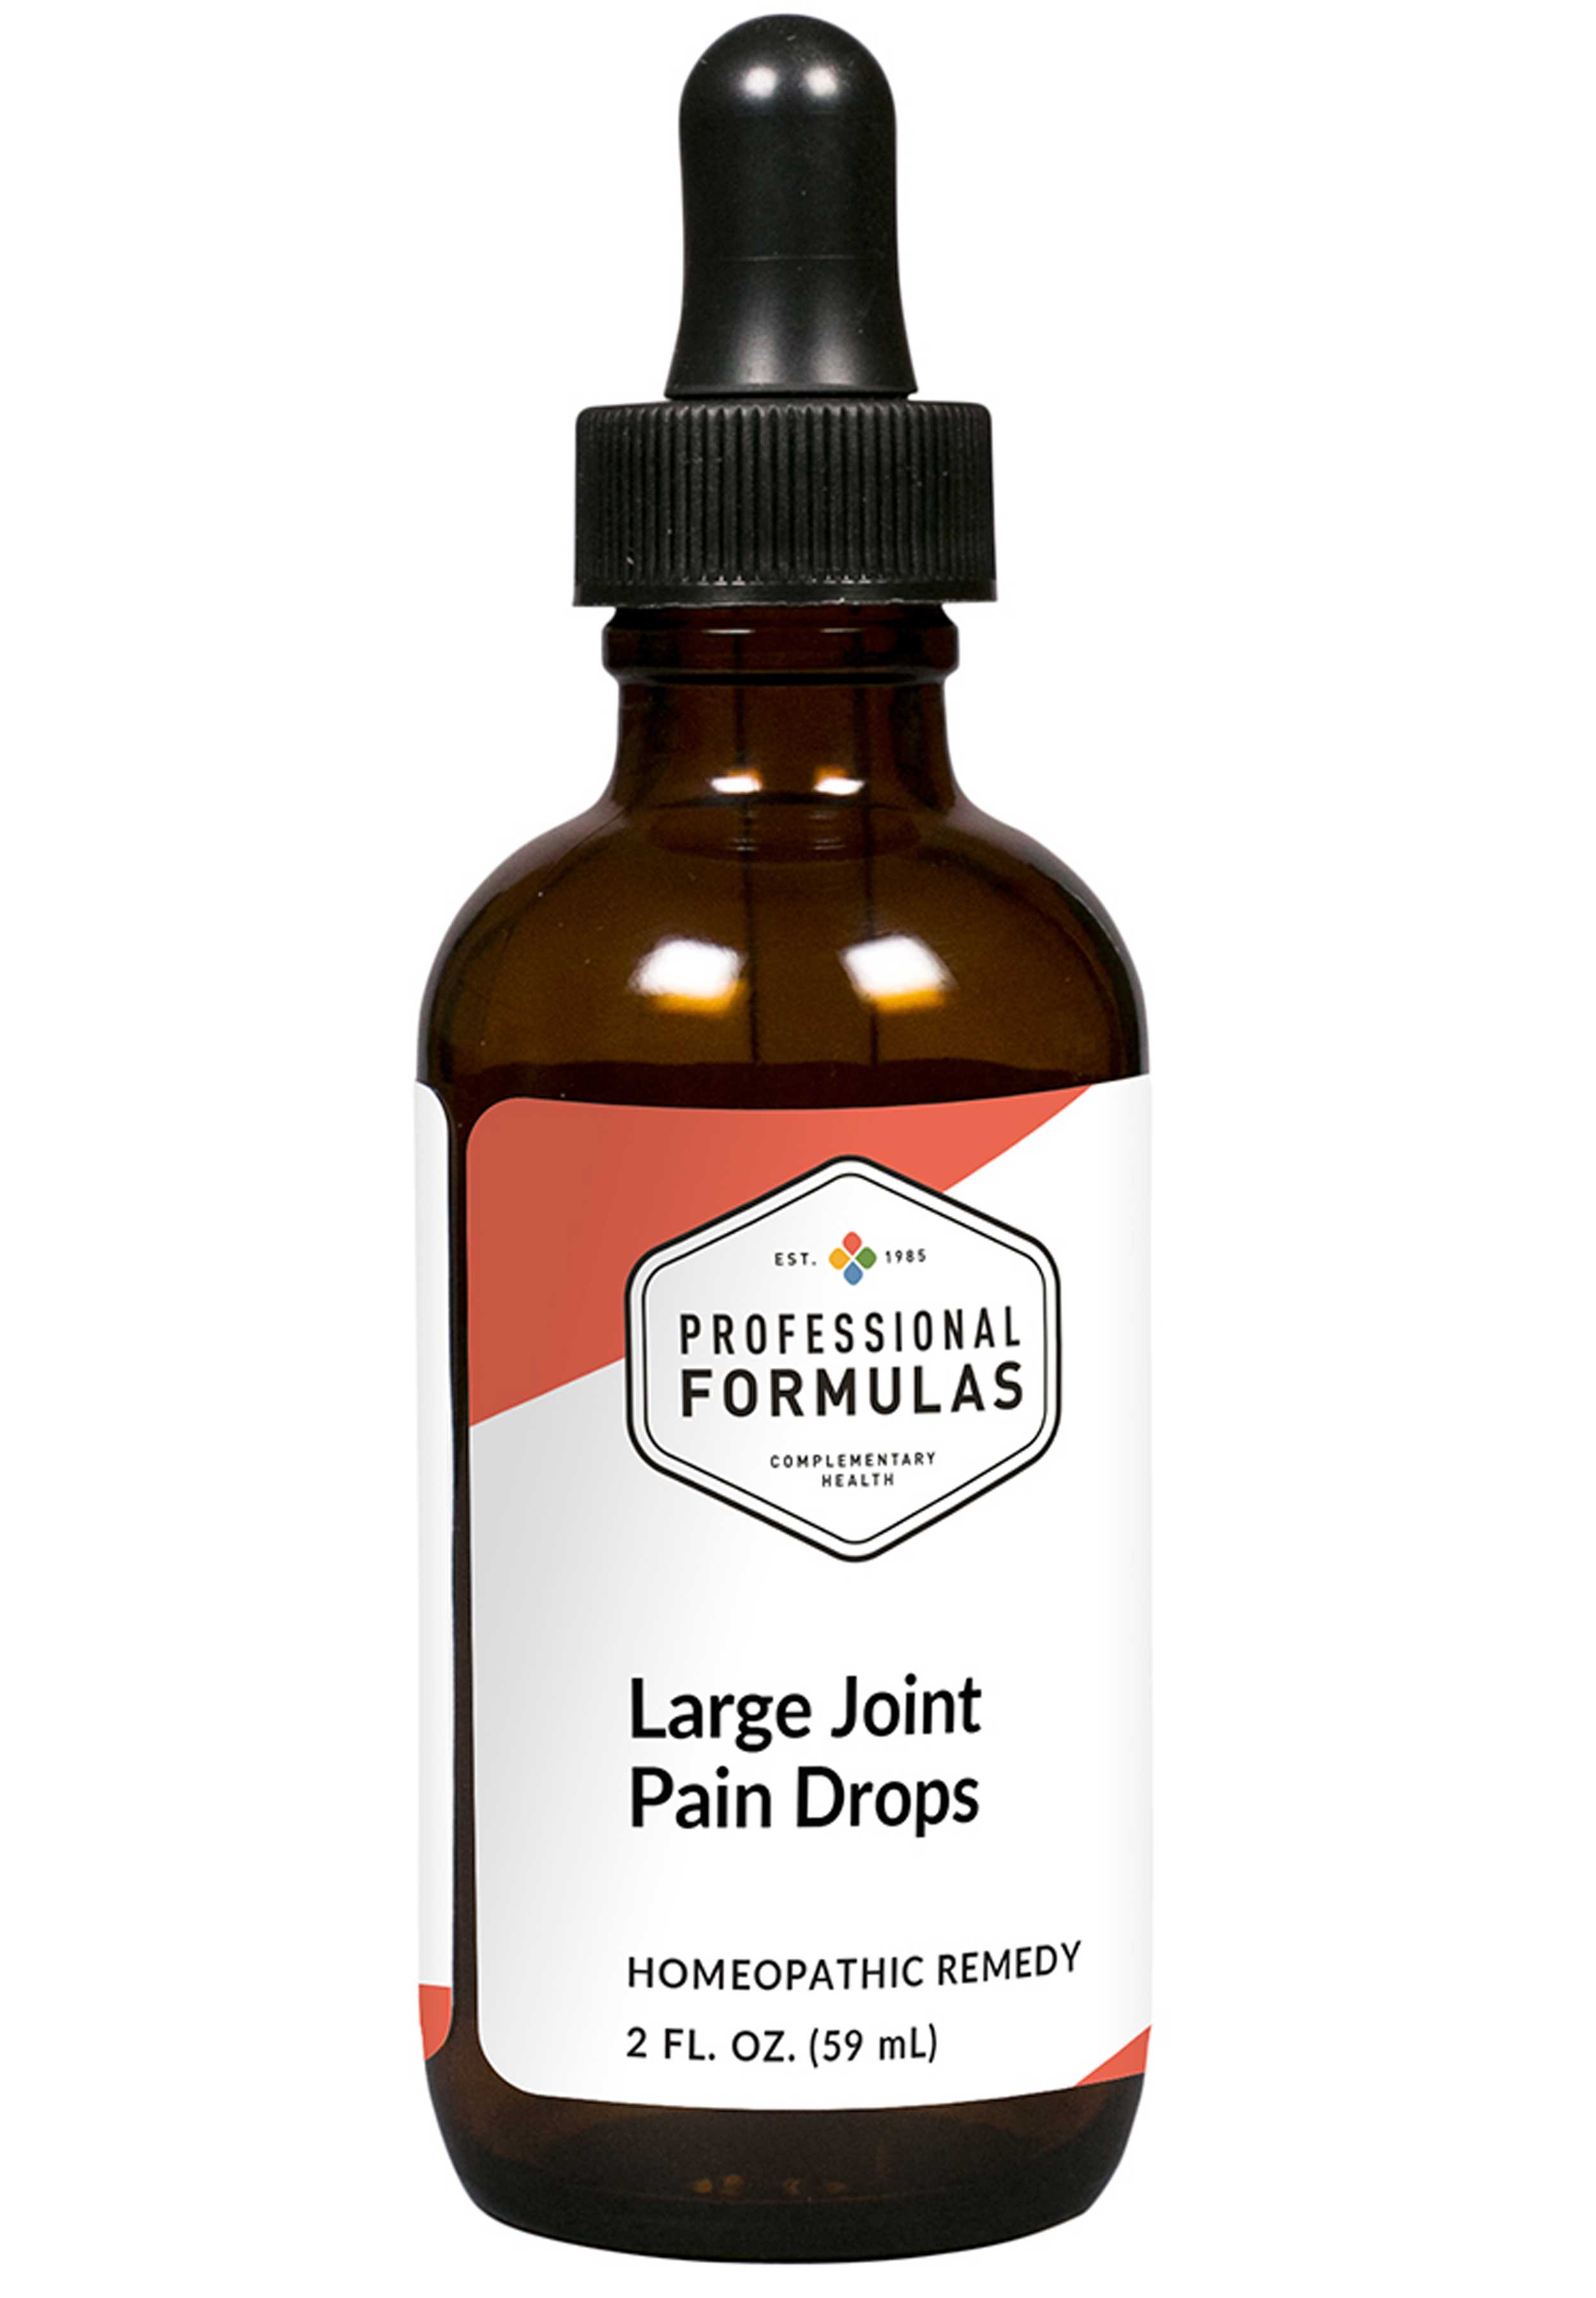 Professional Formulas Large Joint Pain Drops